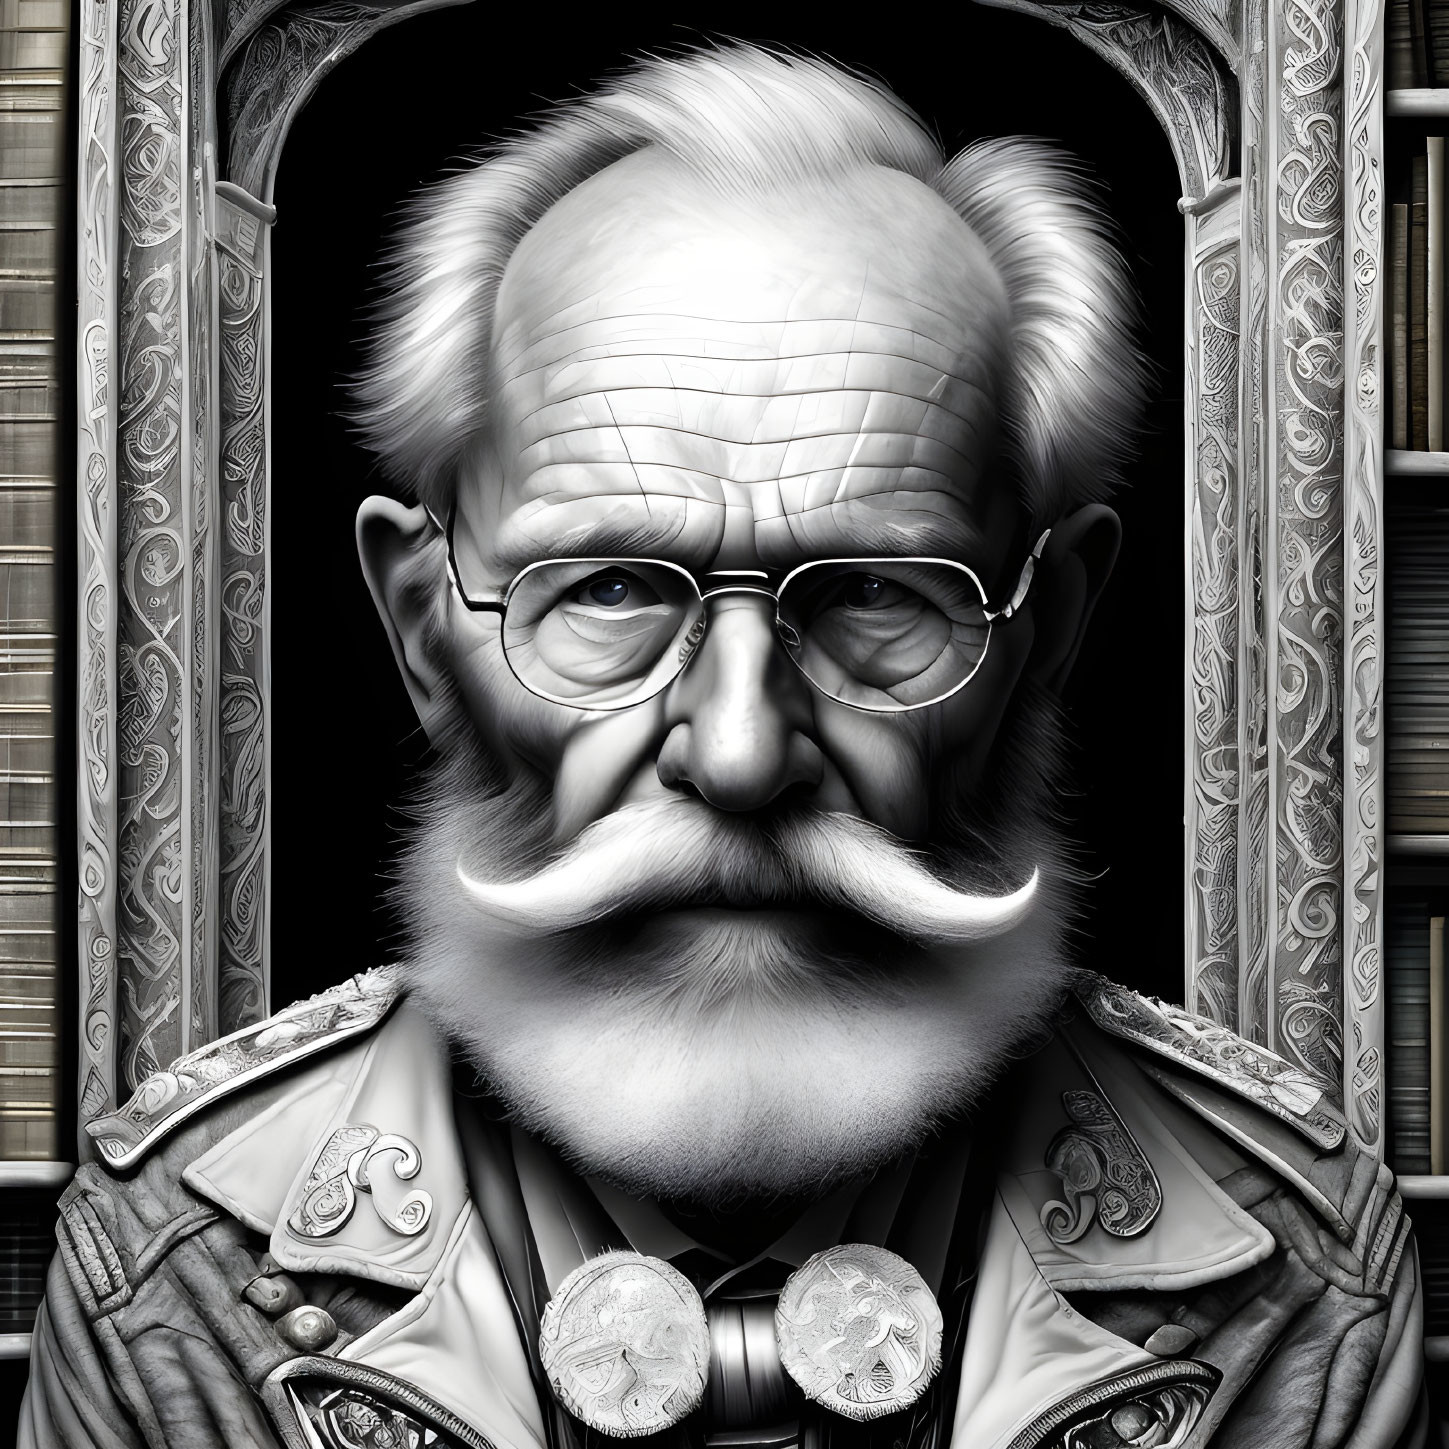 Detailed monochromatic hyper-realistic illustration of elderly man with mustache, glasses, ornate attire